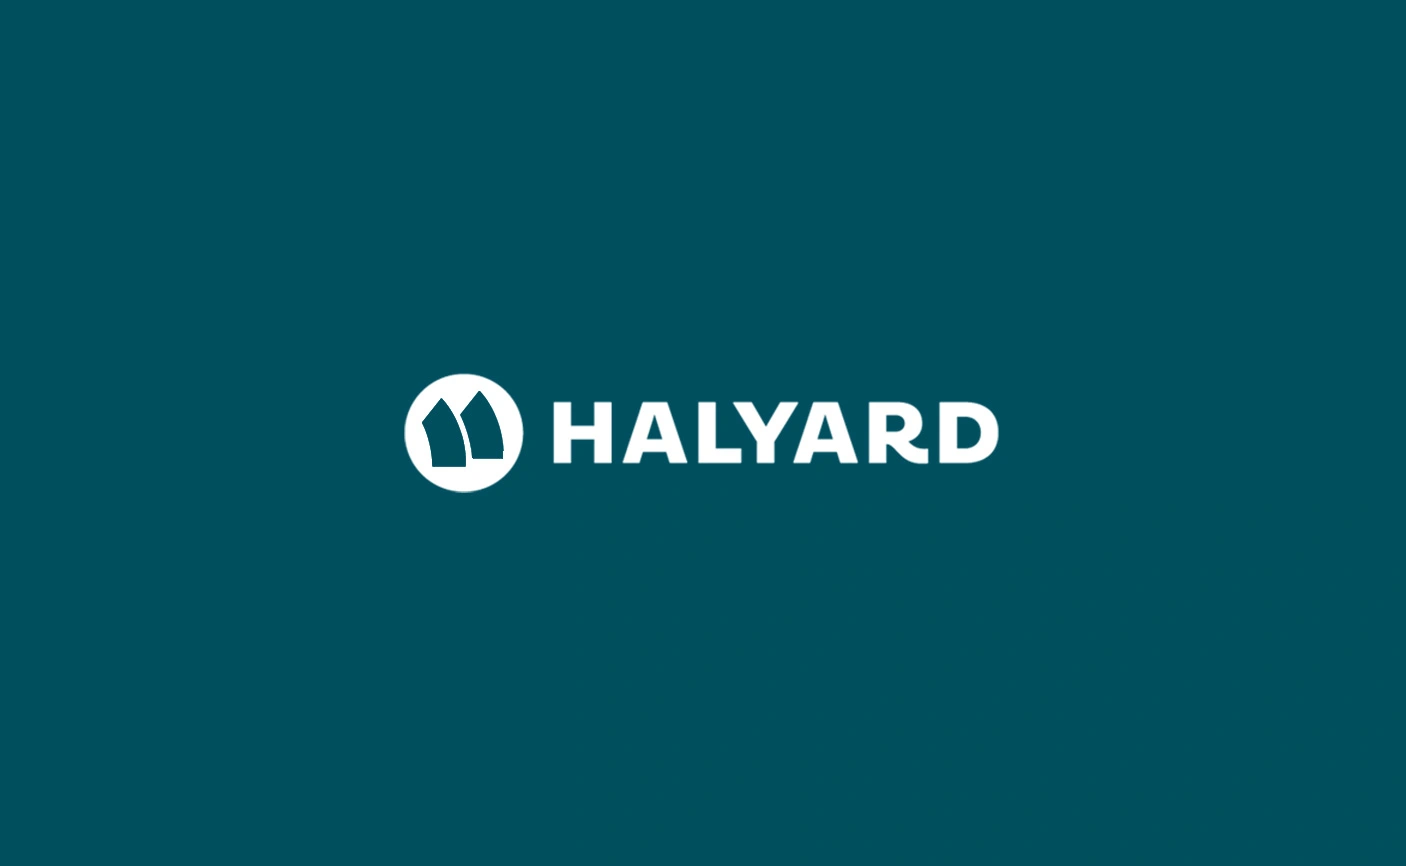 Halyard success story